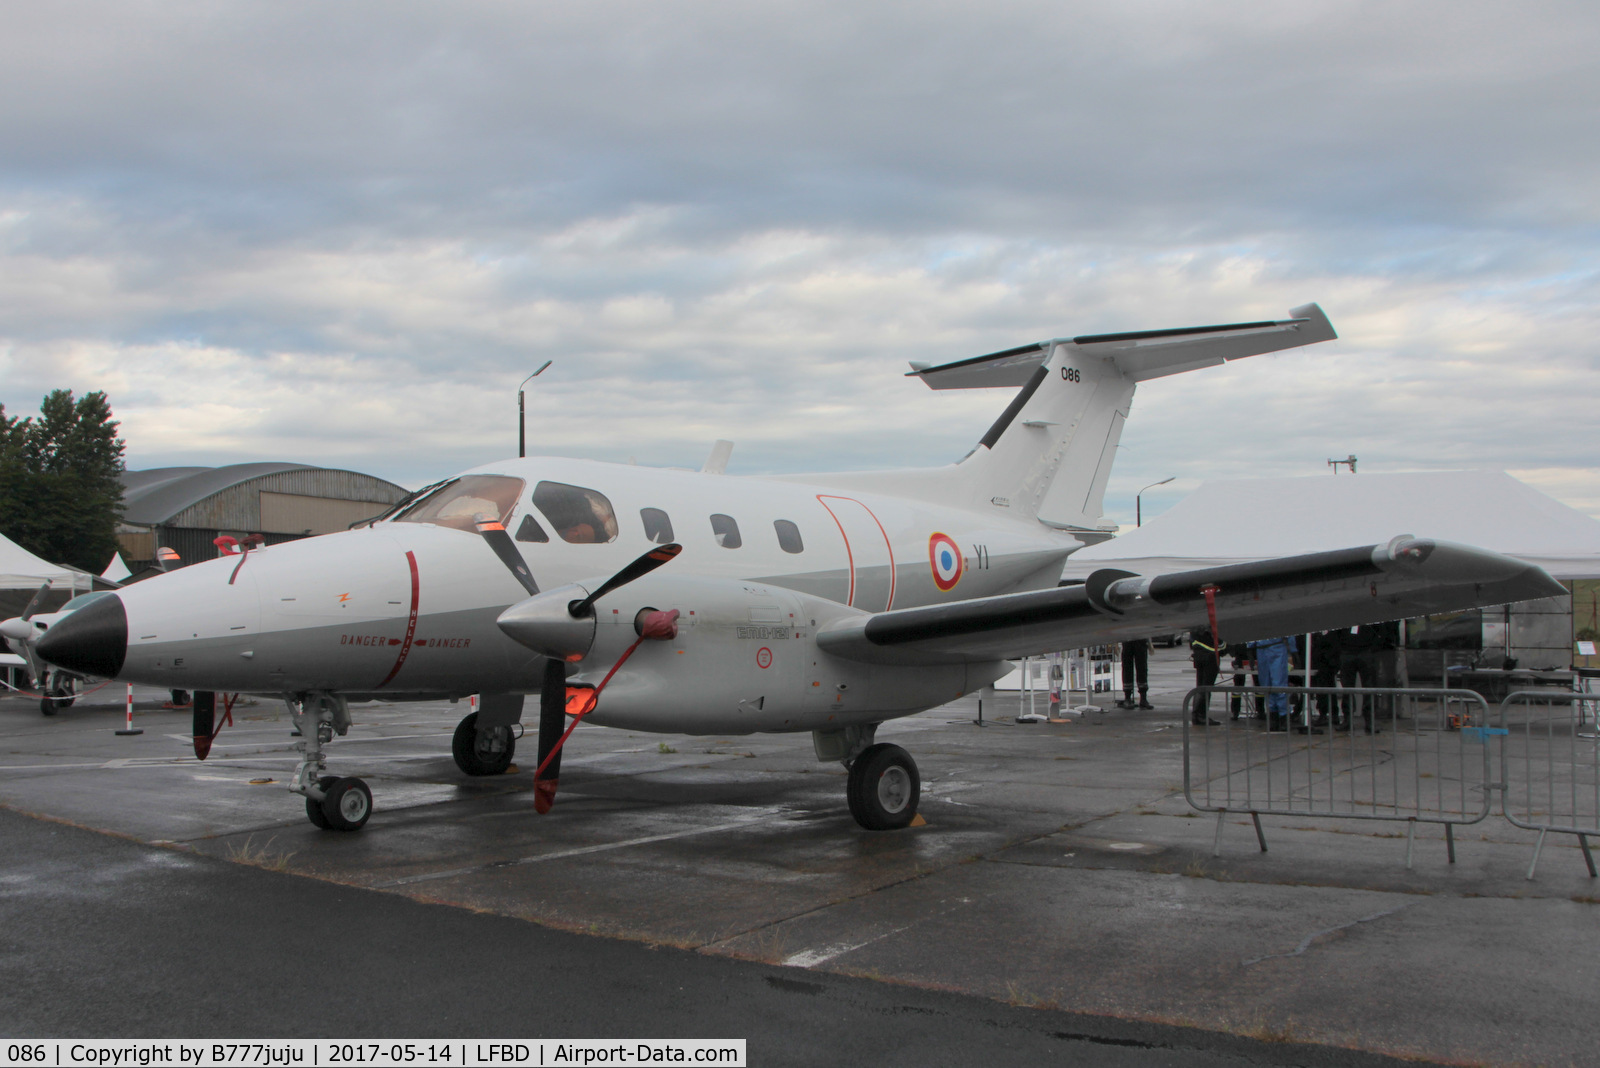 086, Embraer EMB-121AA Xingu C/N 121086, new peint